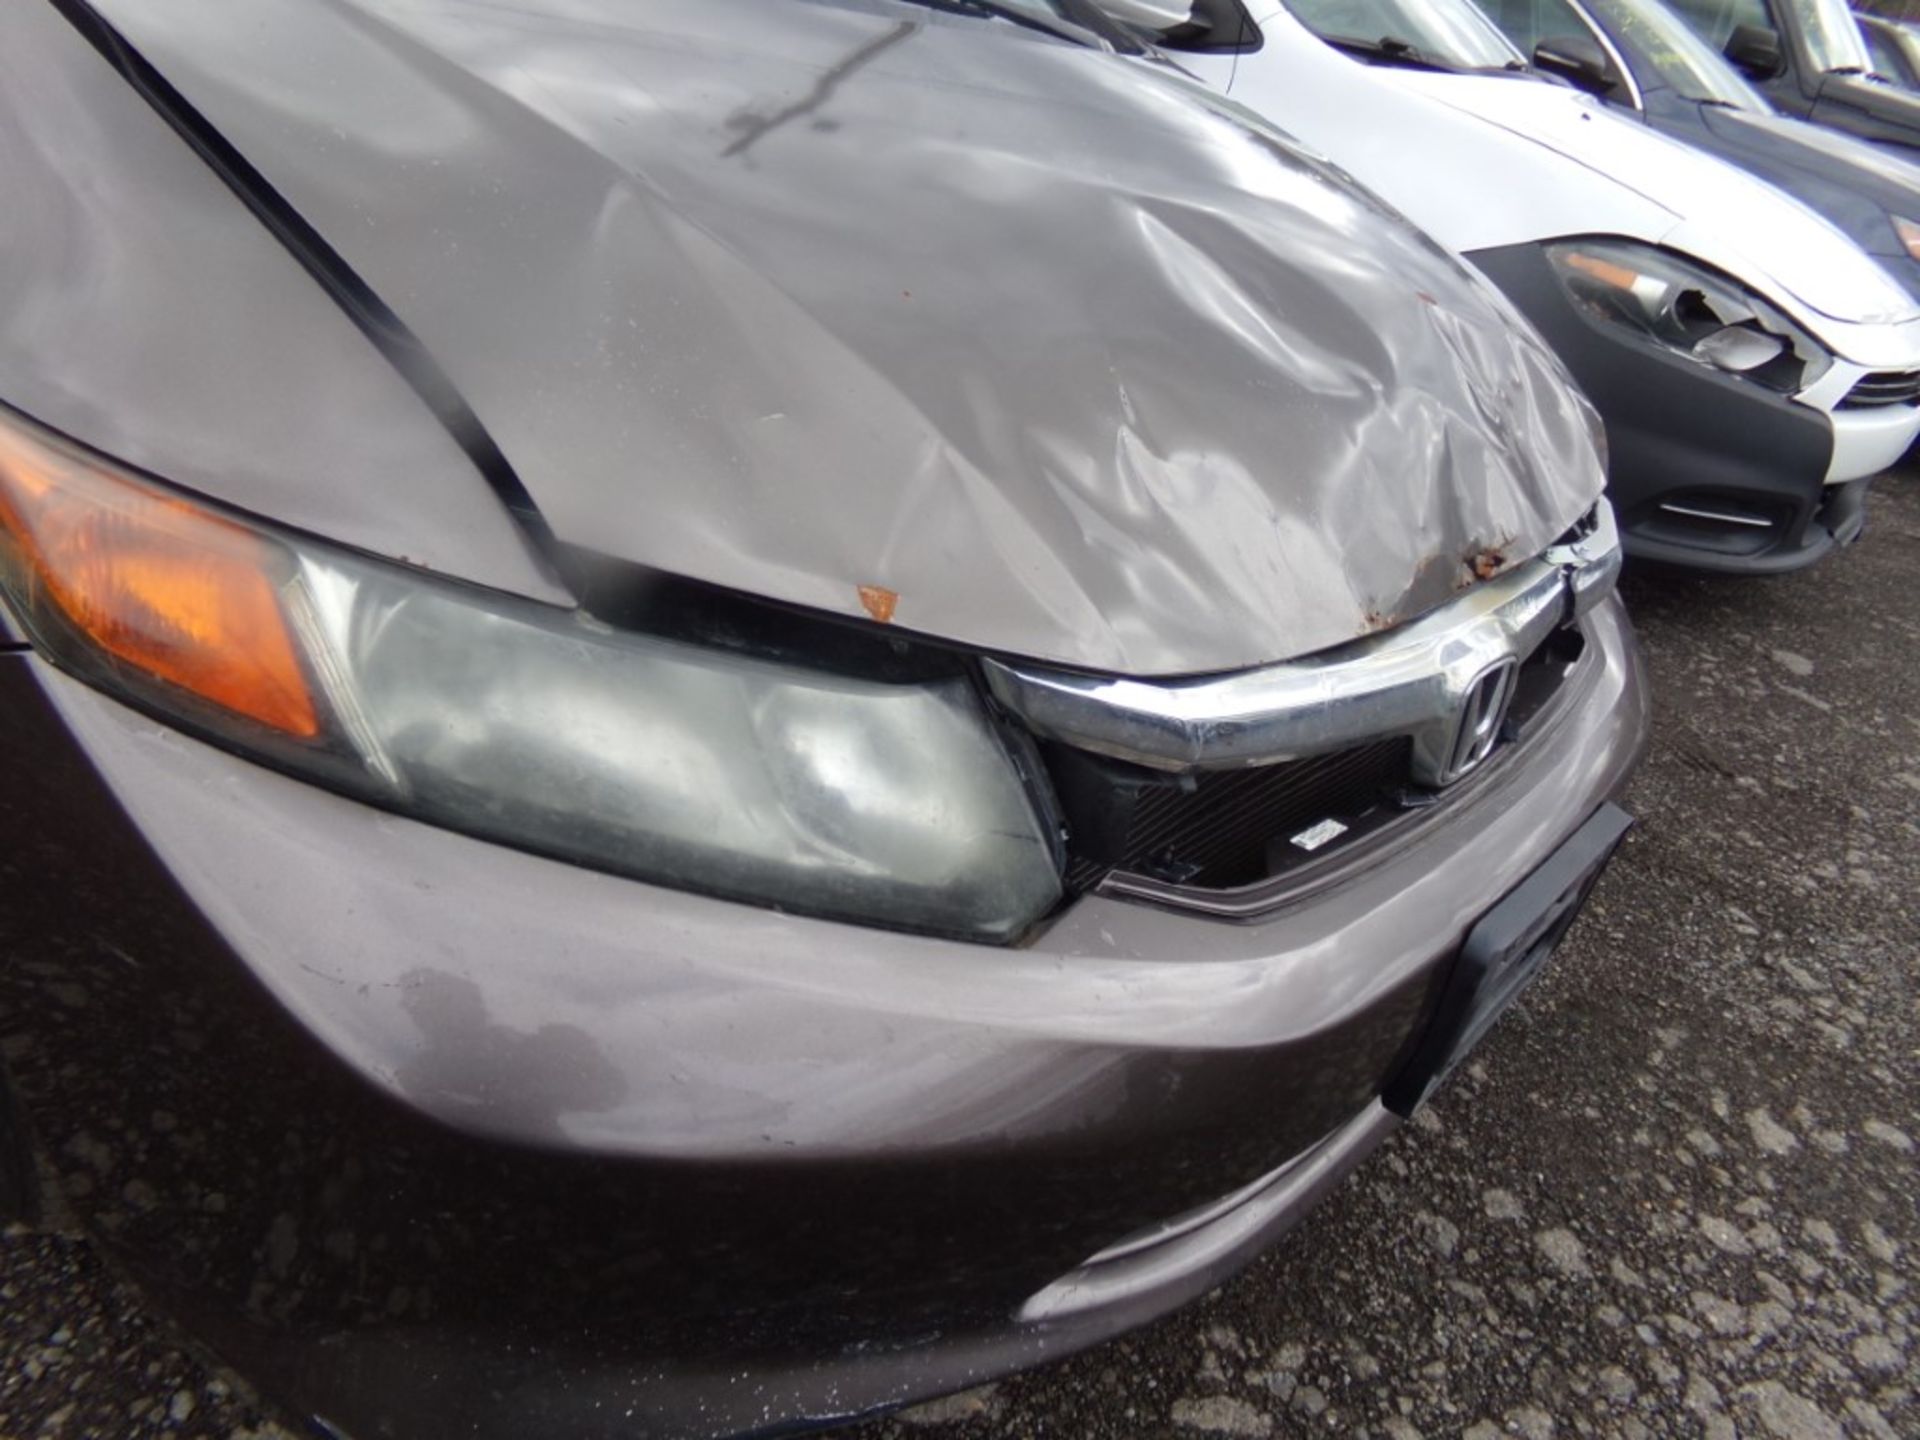 2012 Honda Civic LX, Gray, 163,644 Miles, VIN#: 2HGFB2F55CH572783, CRACKED WINDSHIELD, PAINT FADED - Bild 7 aus 11